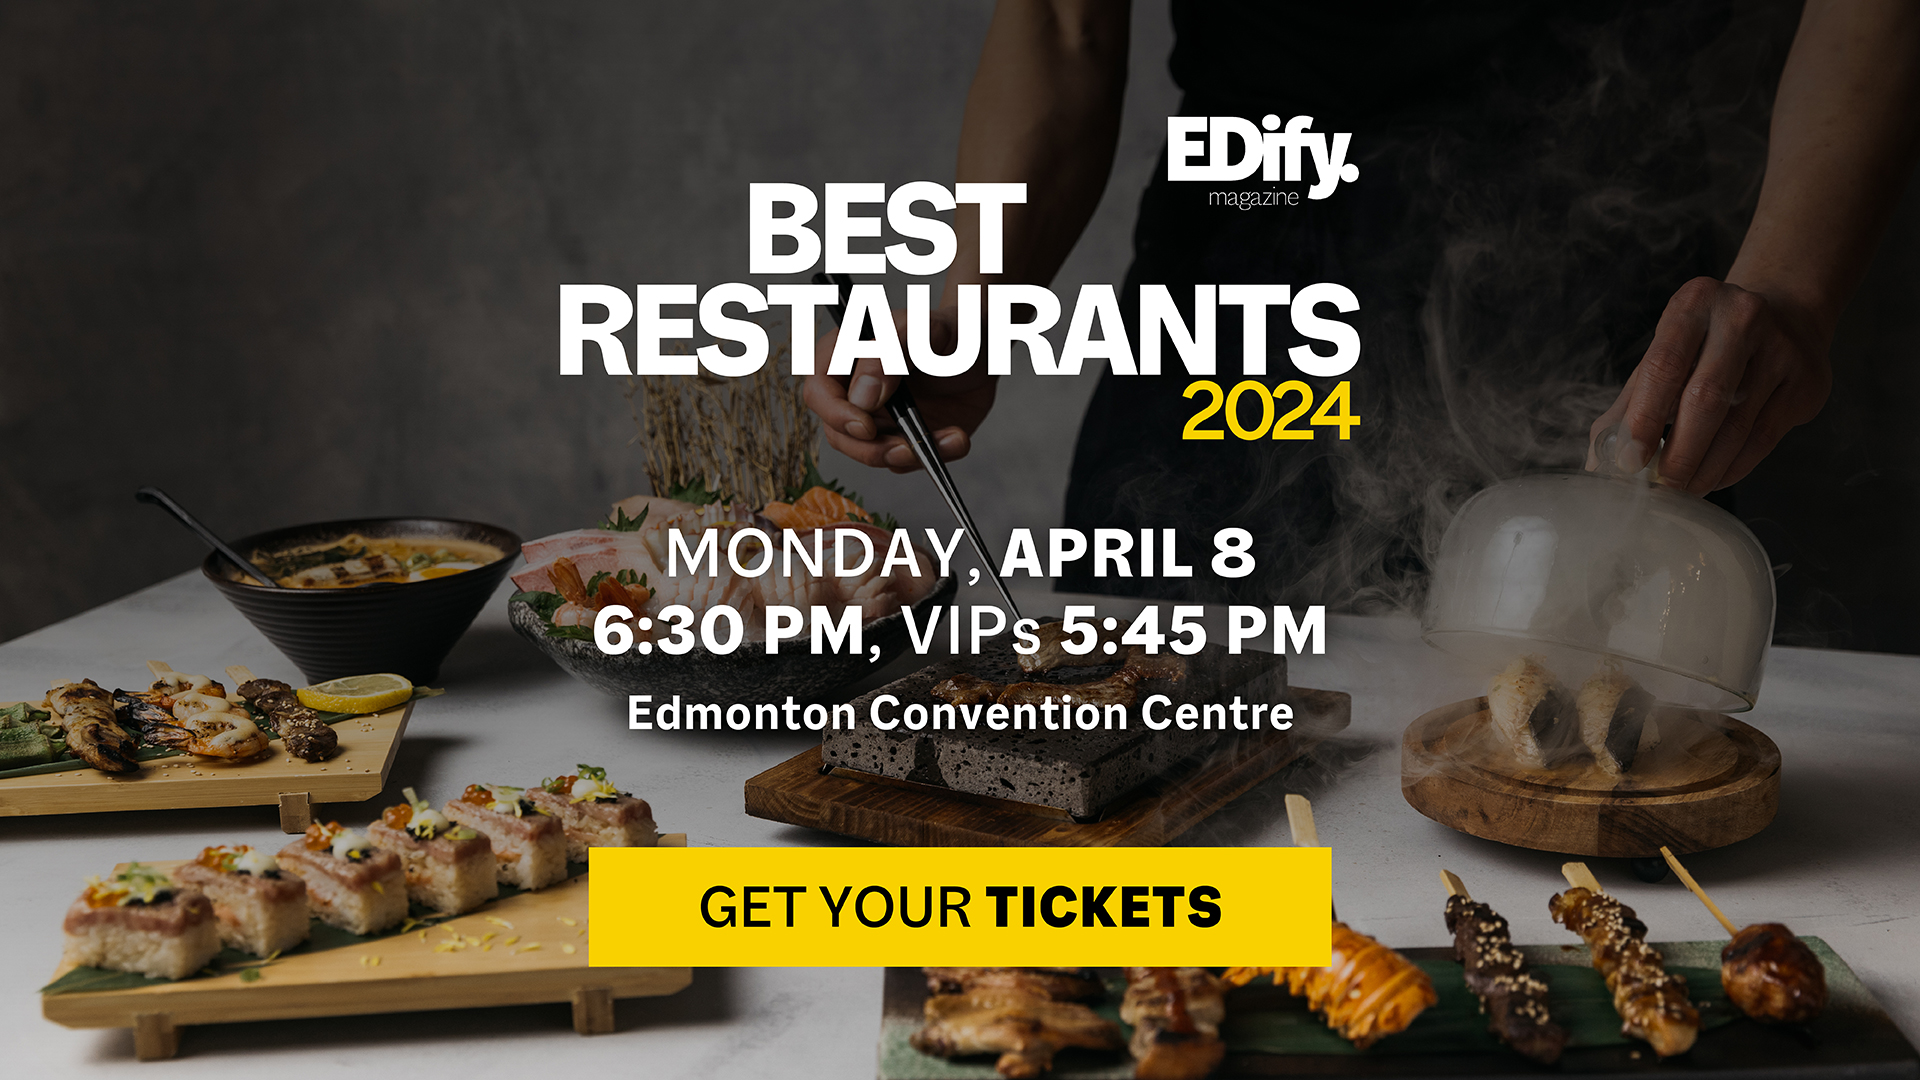 Best Restaurants 2024  Edify Edmonton - Tickets